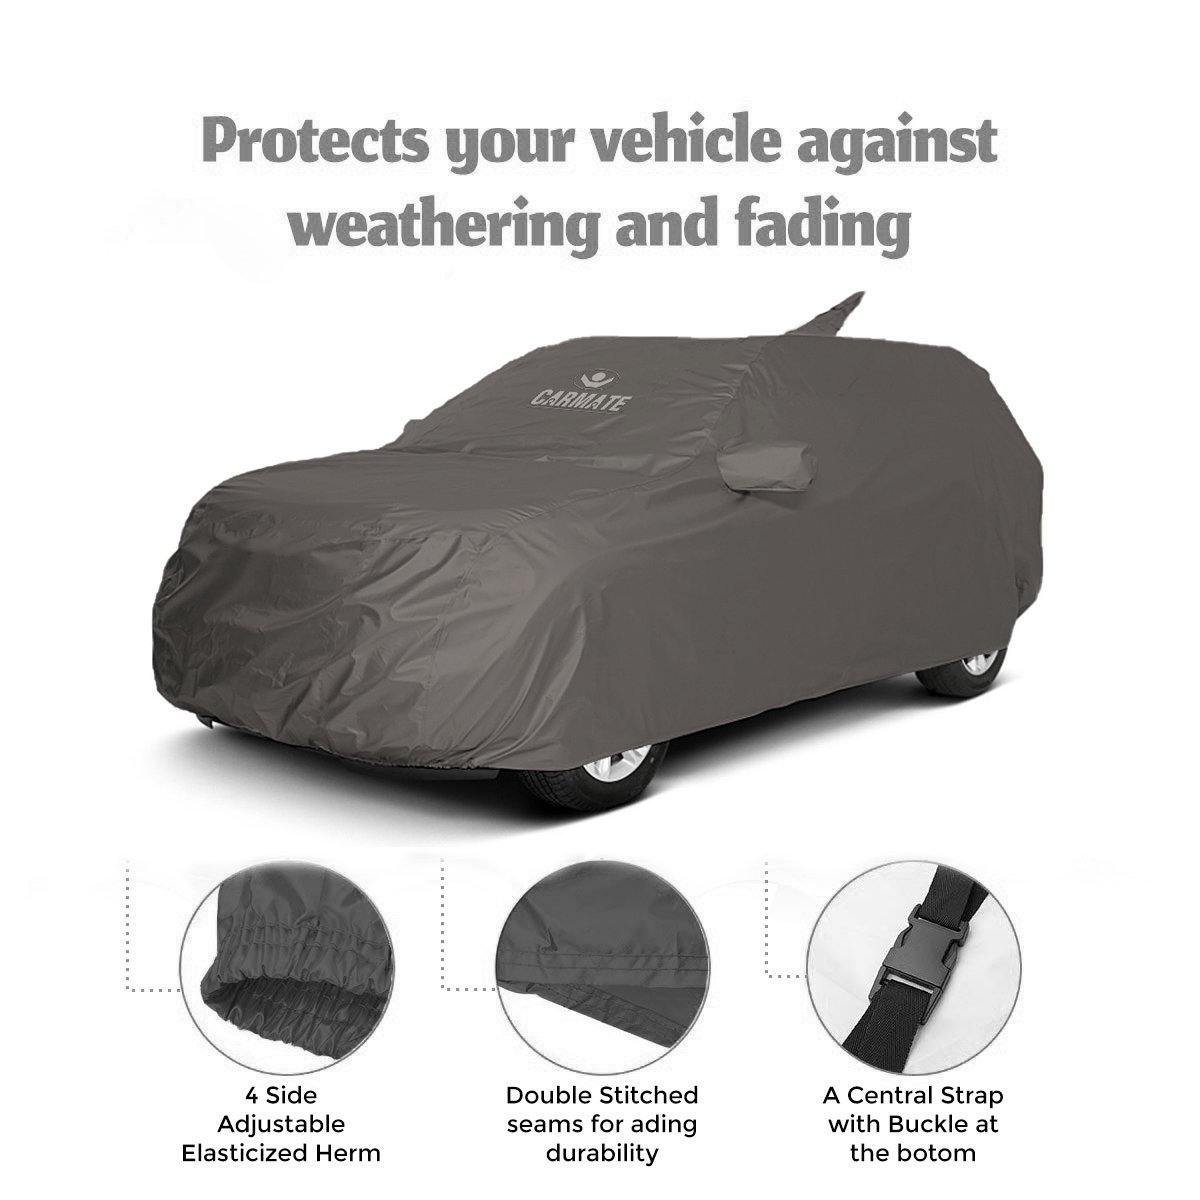 Carmate Car Body Cover 100% Waterproof Pride (Grey) for Audi - A6 - CARMATE®